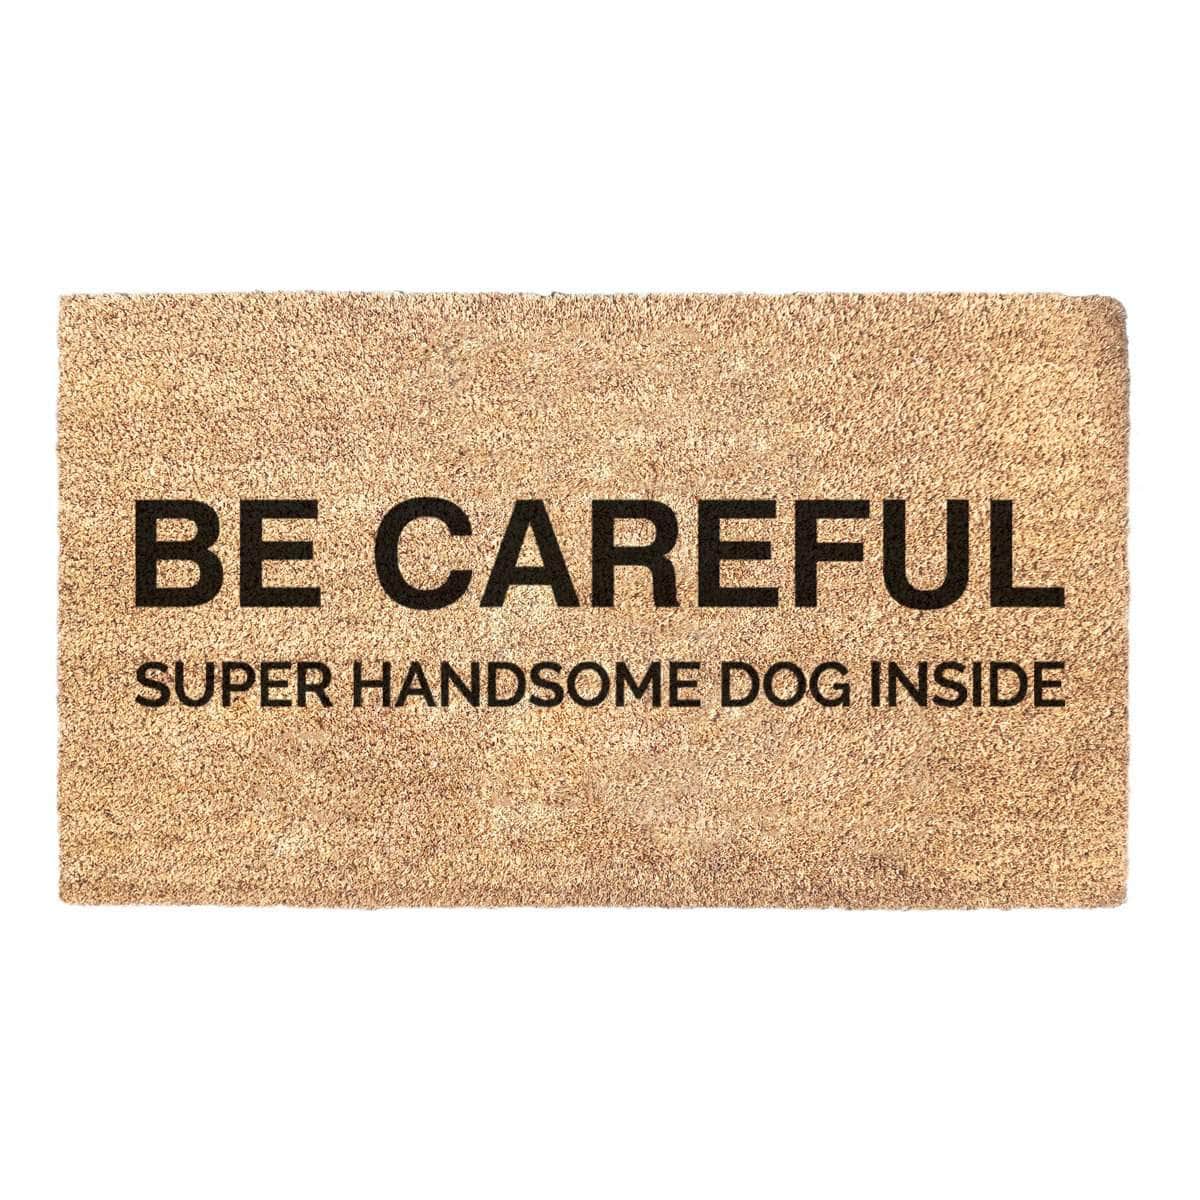 Super Handsome Dog Inside - Doormat